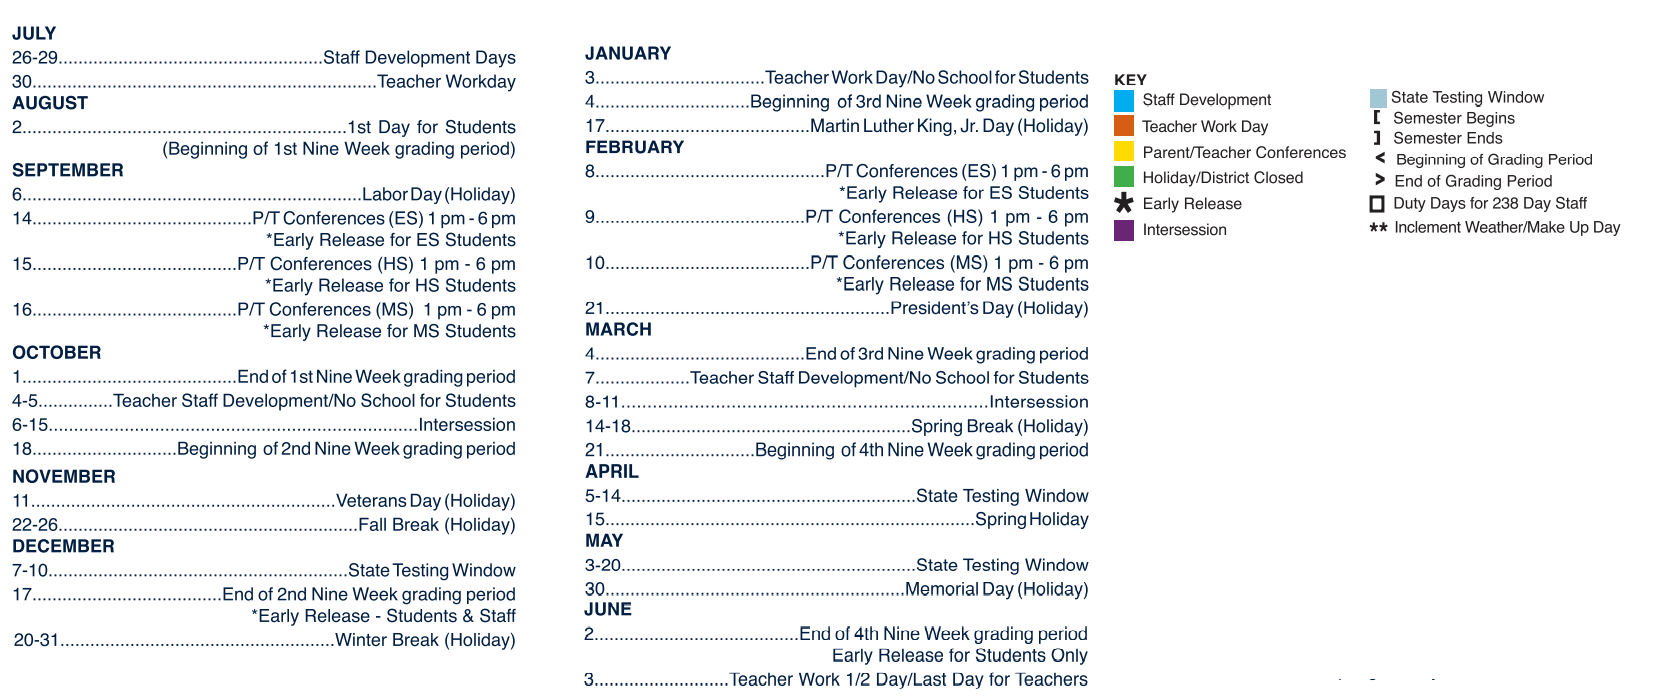 District School Academic Calendar Key for E-12 NW Elementary